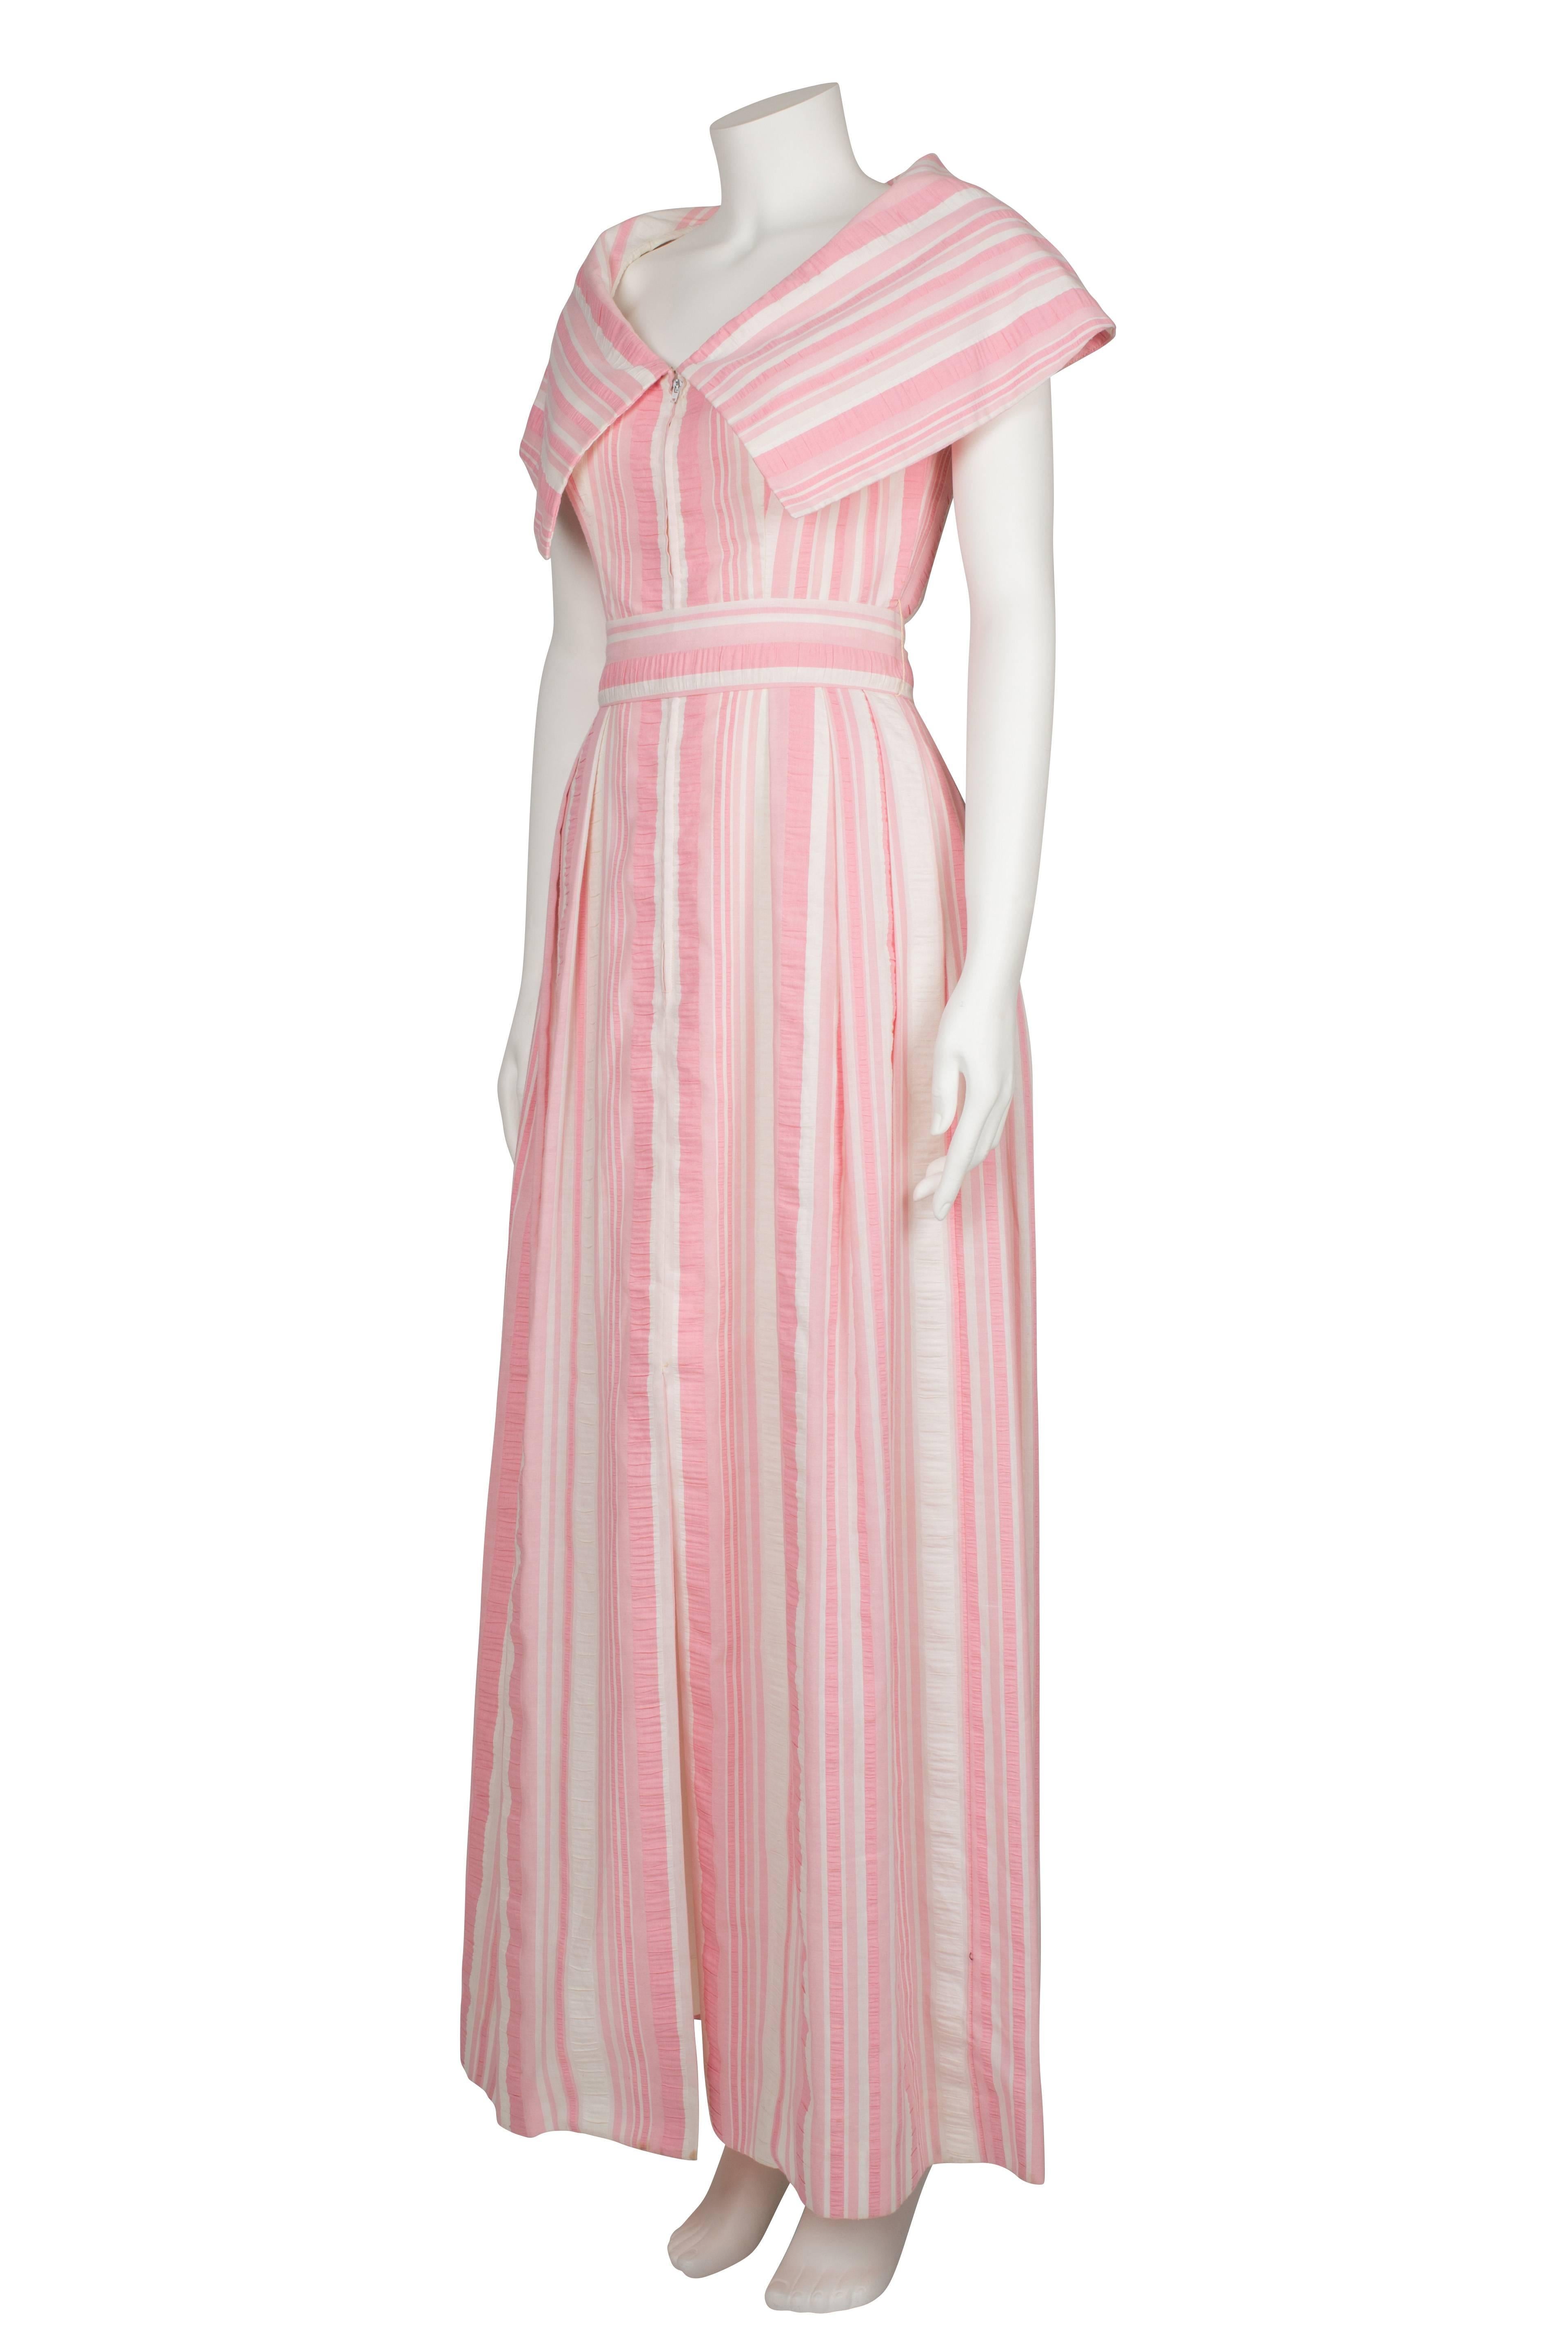 1970s Estevez Seersucker Pink and Ivory Candy Stripe Dress Size S For Sale 2